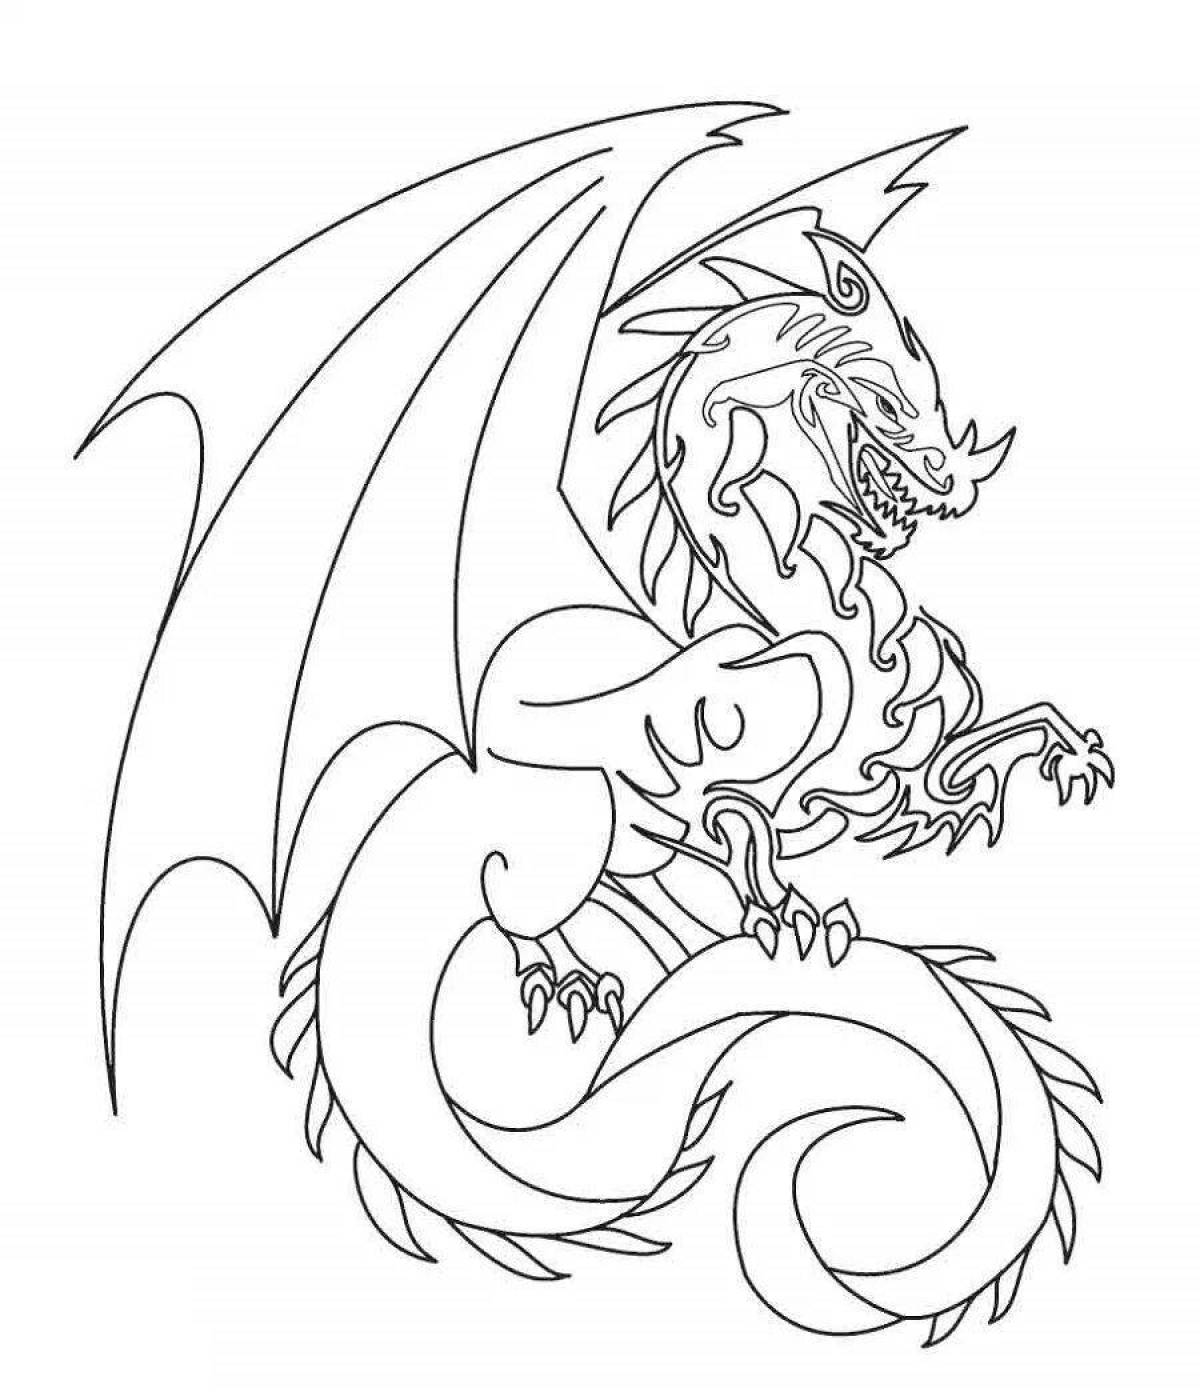 Perfect magic dragon coloring page